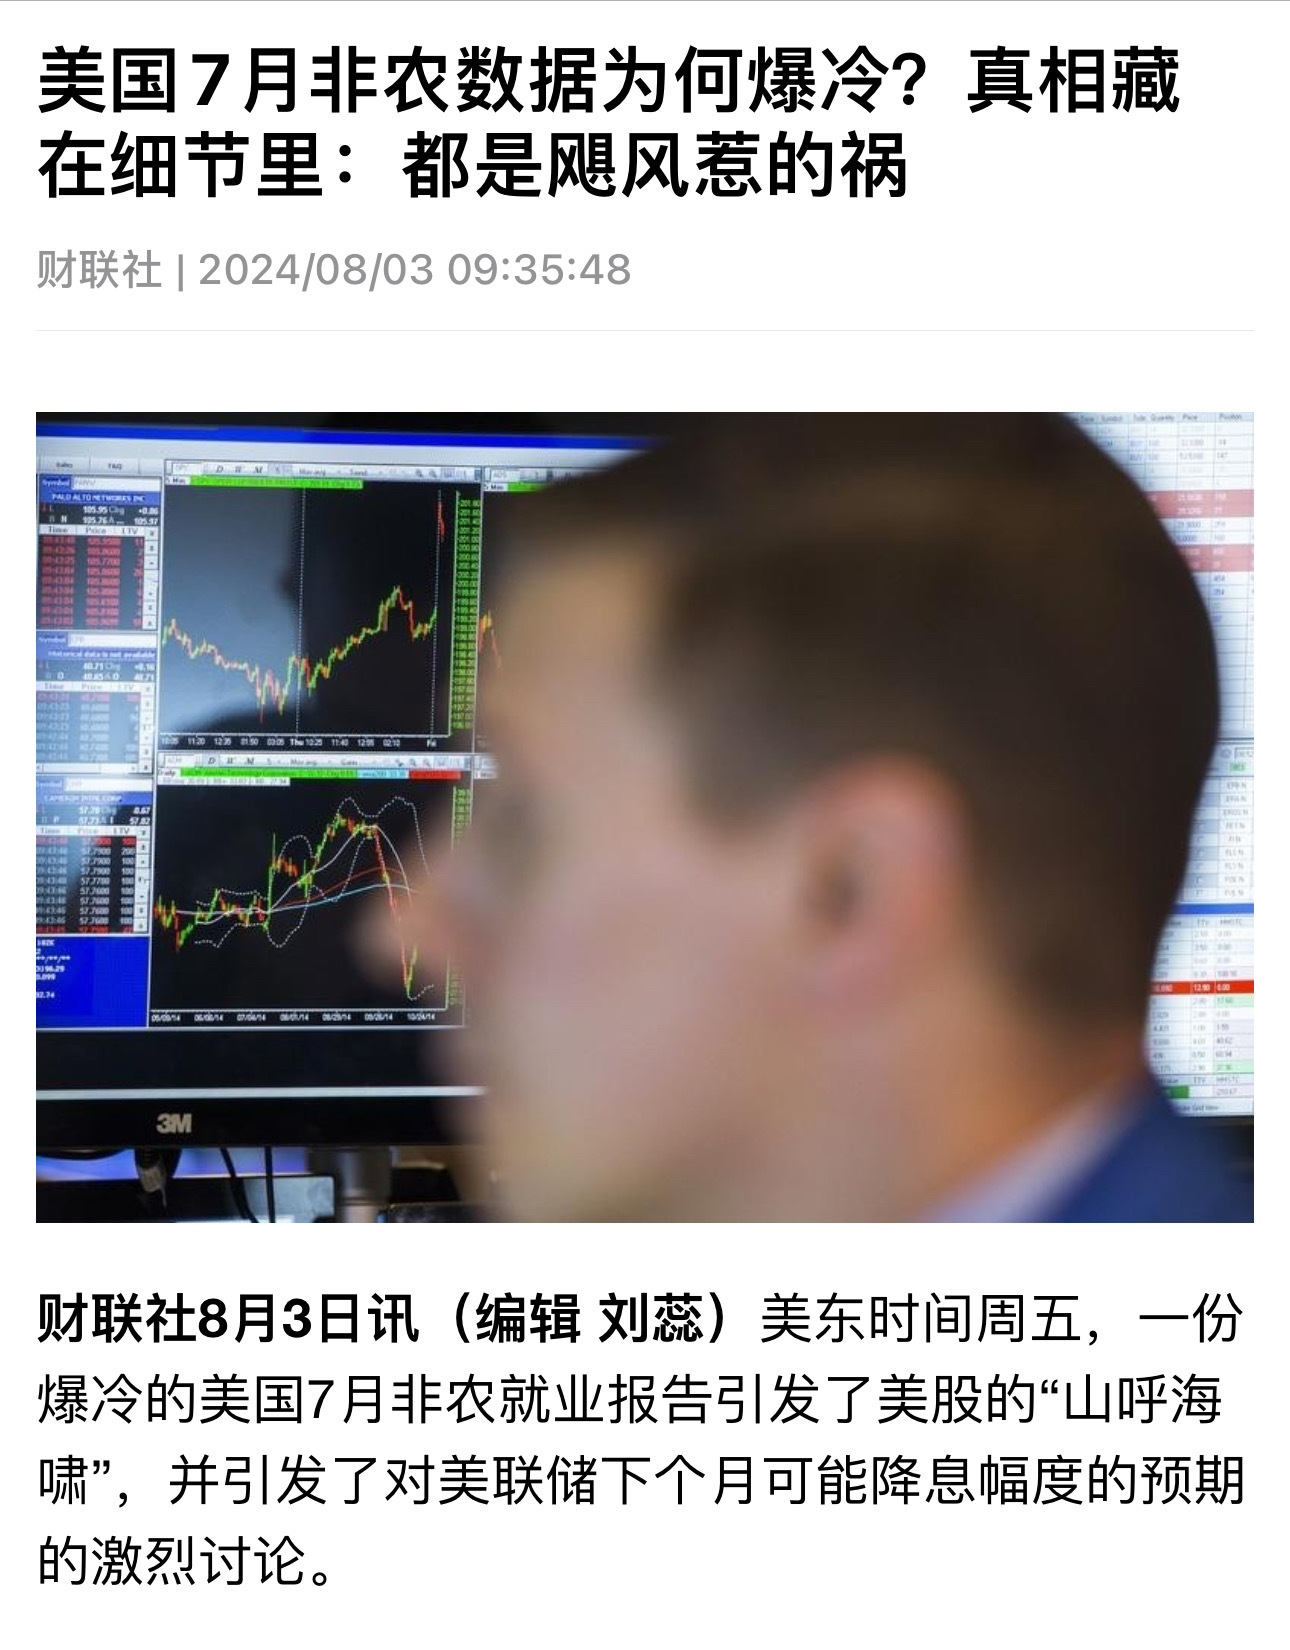 Hello！向你分享一個重要的財經資訊： - https://cn.investing.com/news/stock-market-news/article-2441148